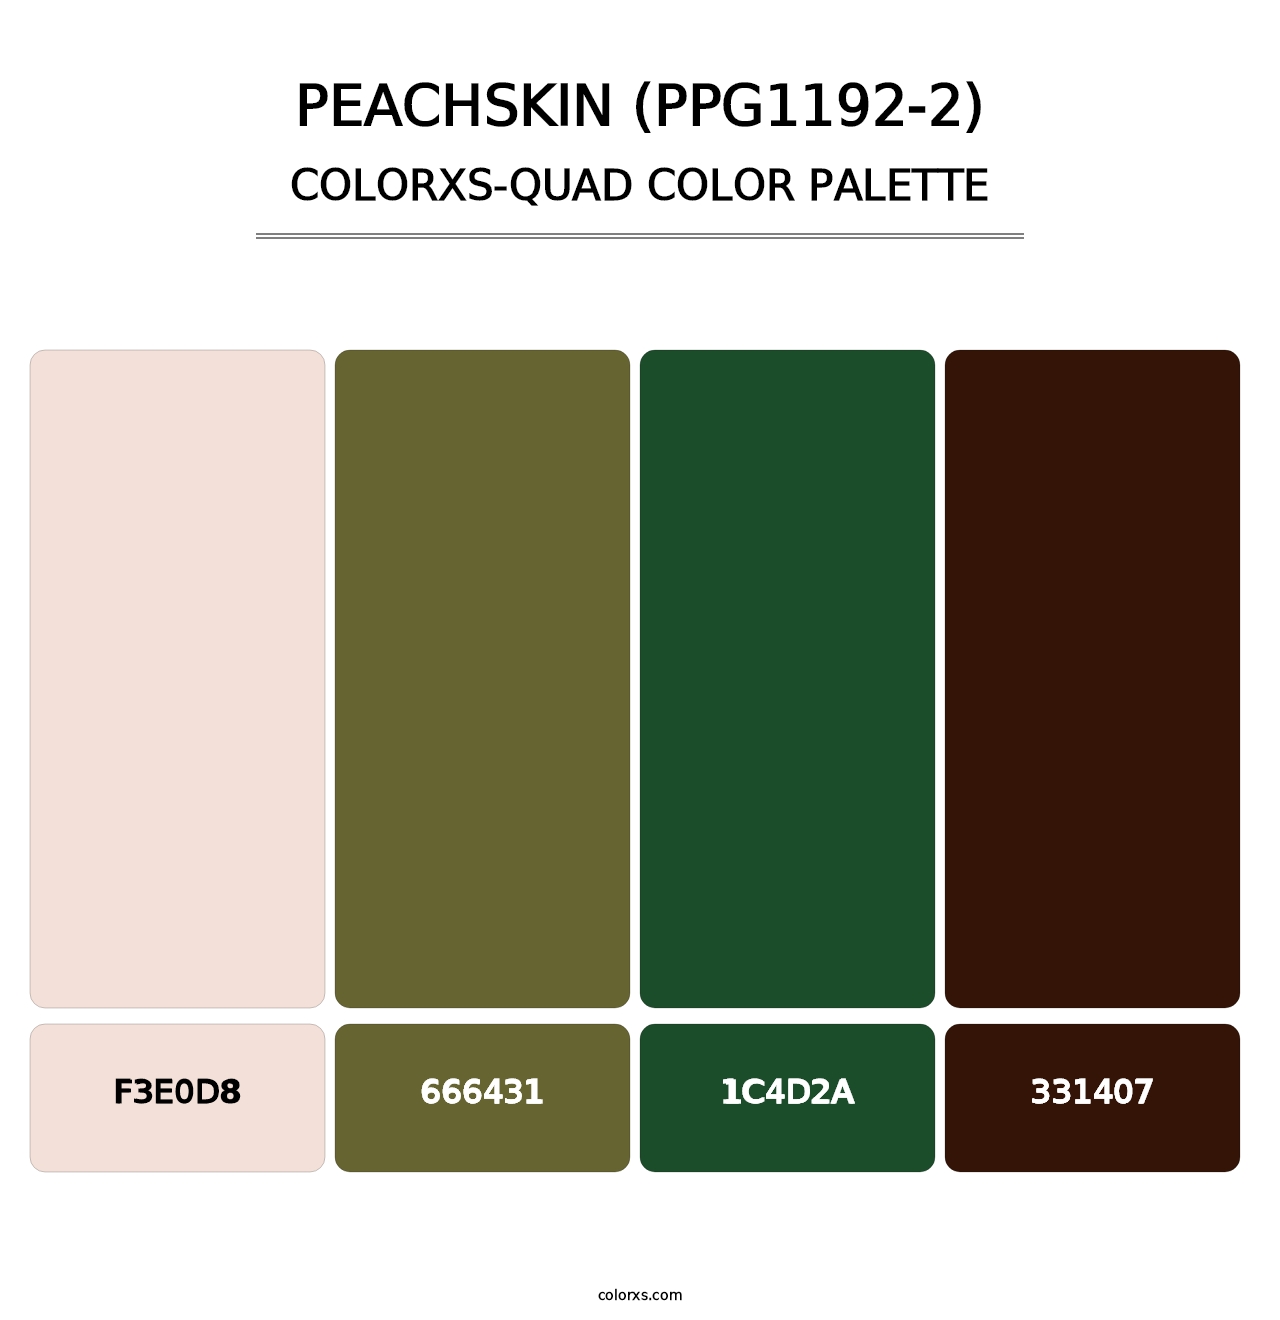 Peachskin (PPG1192-2) - Colorxs Quad Palette